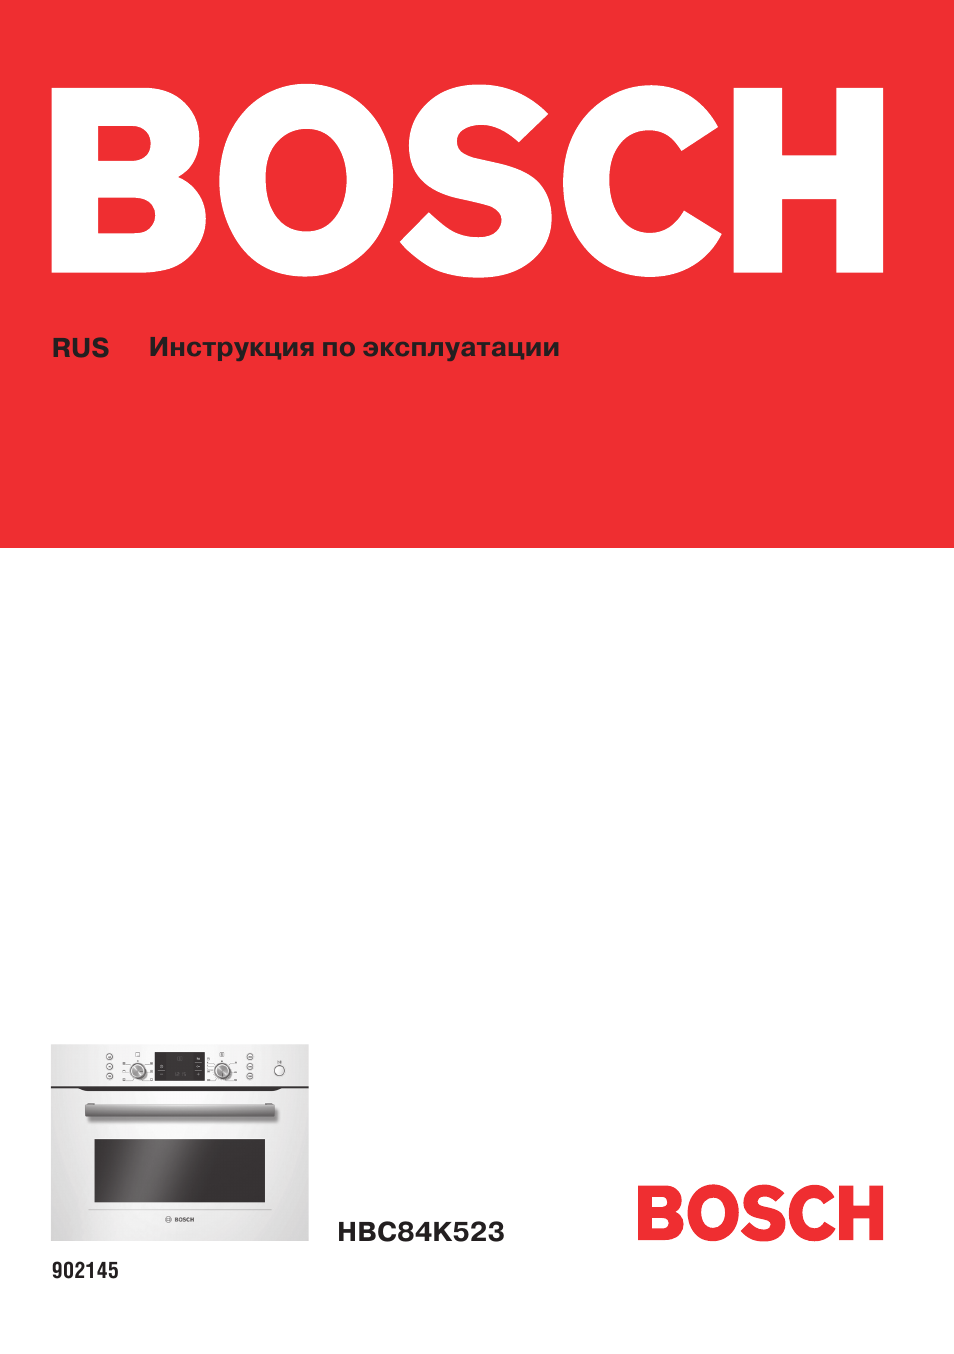 Bosch hbc84k523